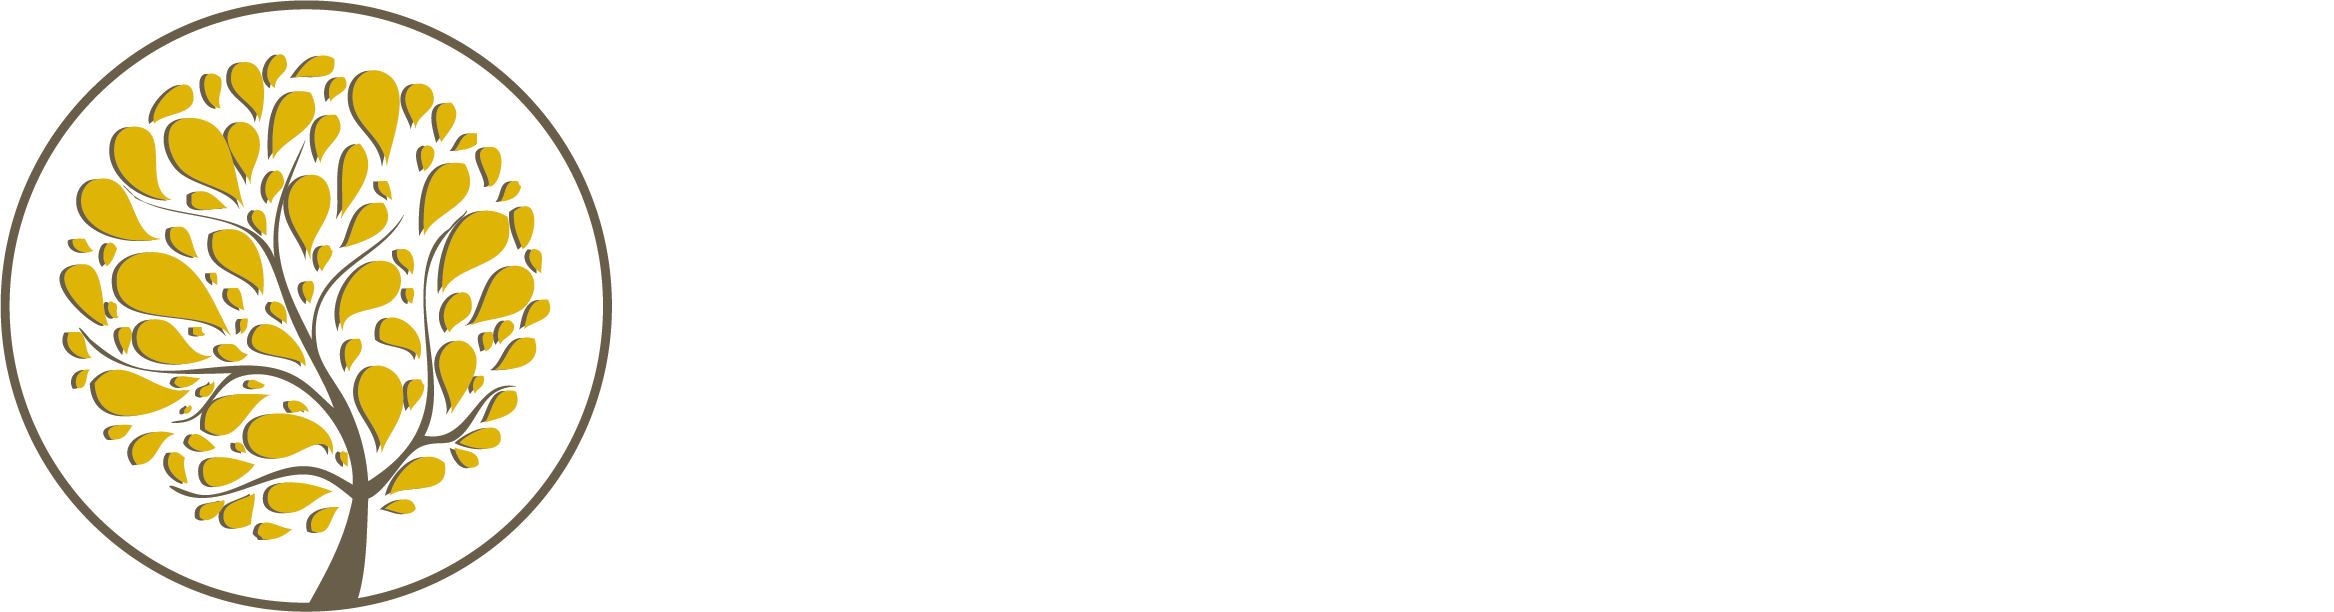 Rolling Meadows - Rolling Meadows Health & Rehabilitation Center